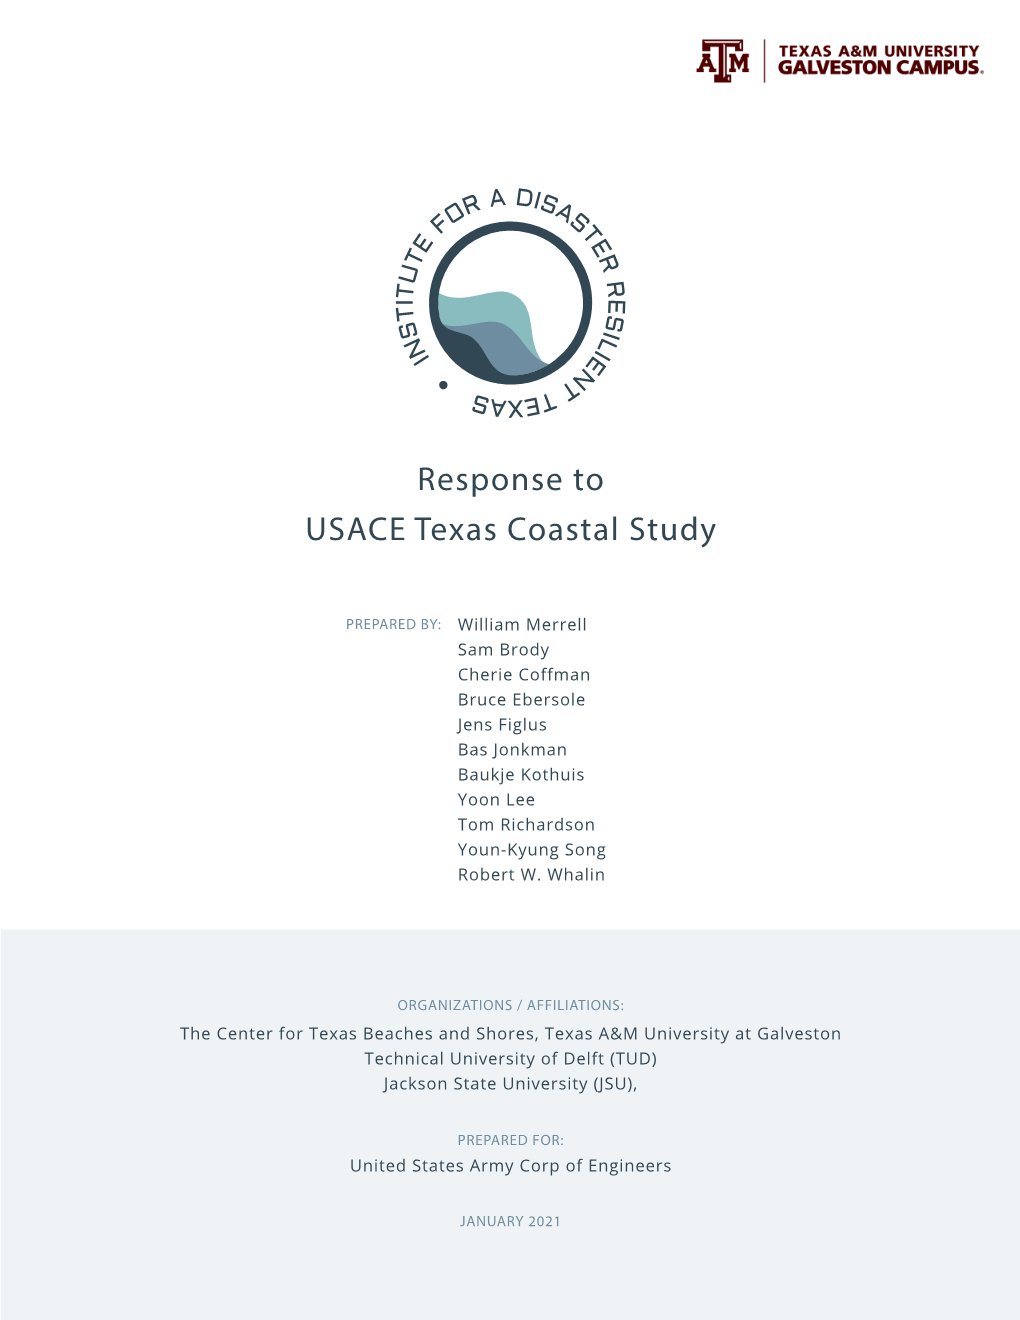 Response to USACE Texas Coastal Study